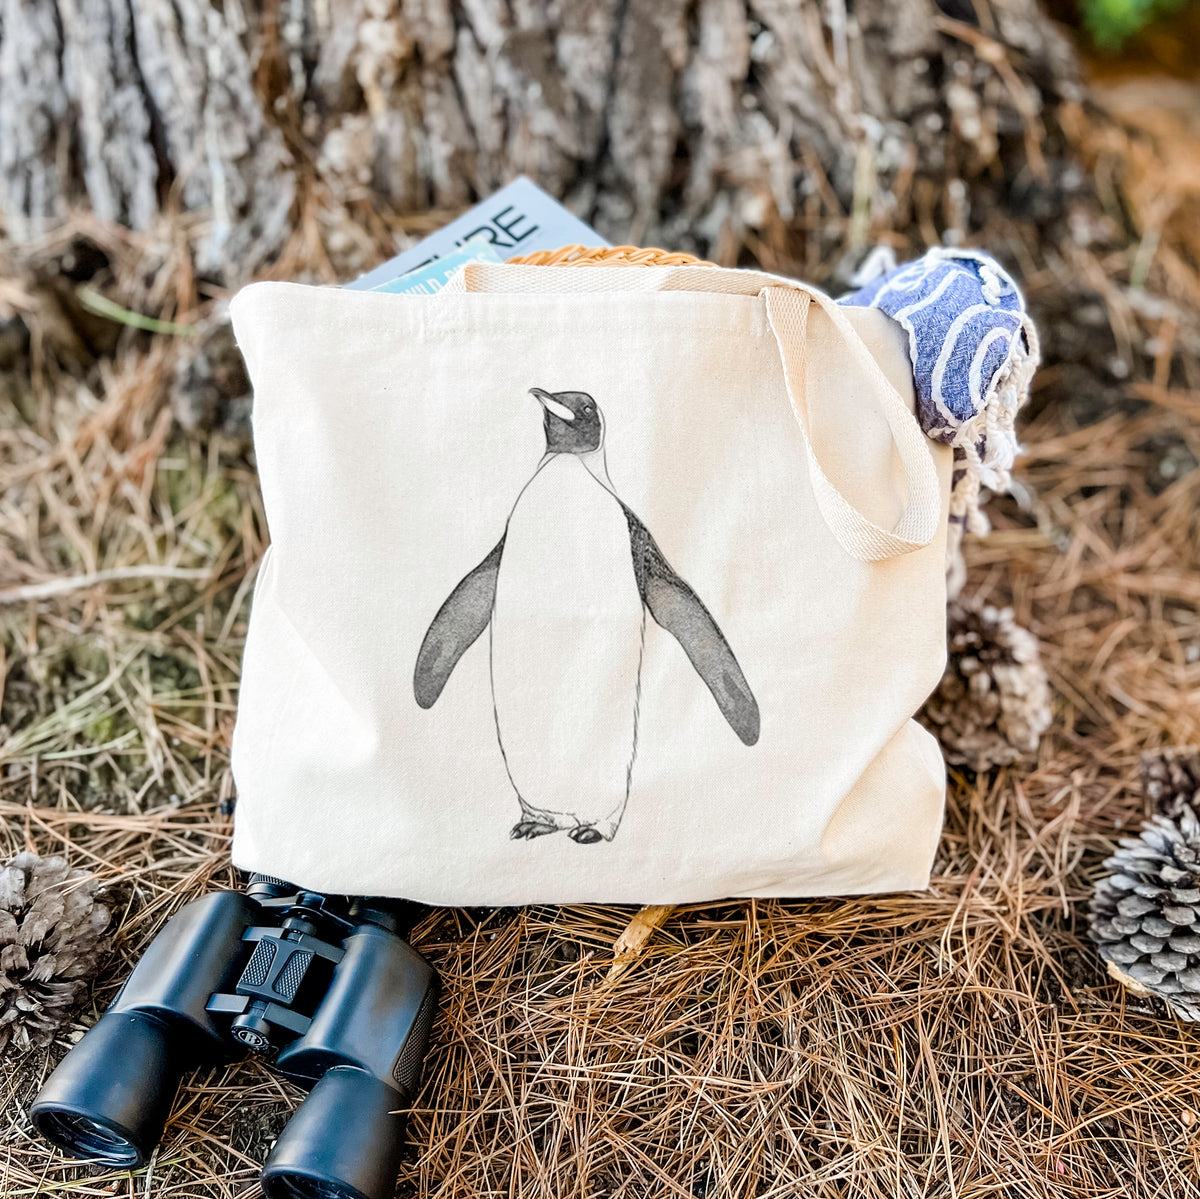 Emperor Penguin - Aptenodytes forsteri - Tote Bag